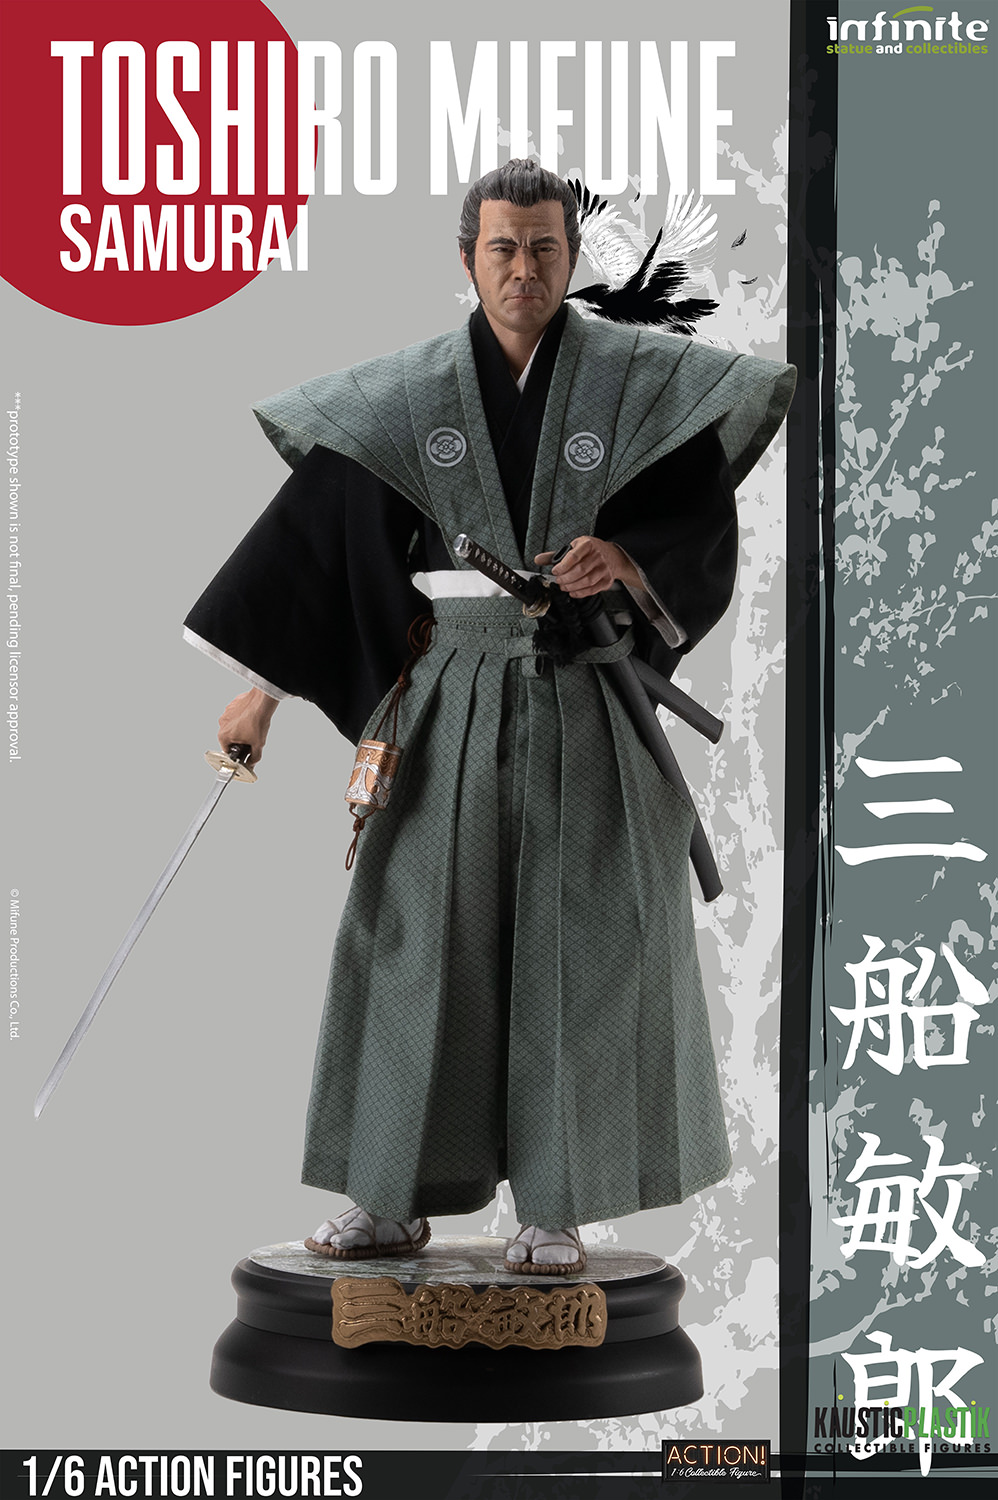 Pre-Order Infinite Statue Toshiro Mifune Samurai Sixth Scale Figure